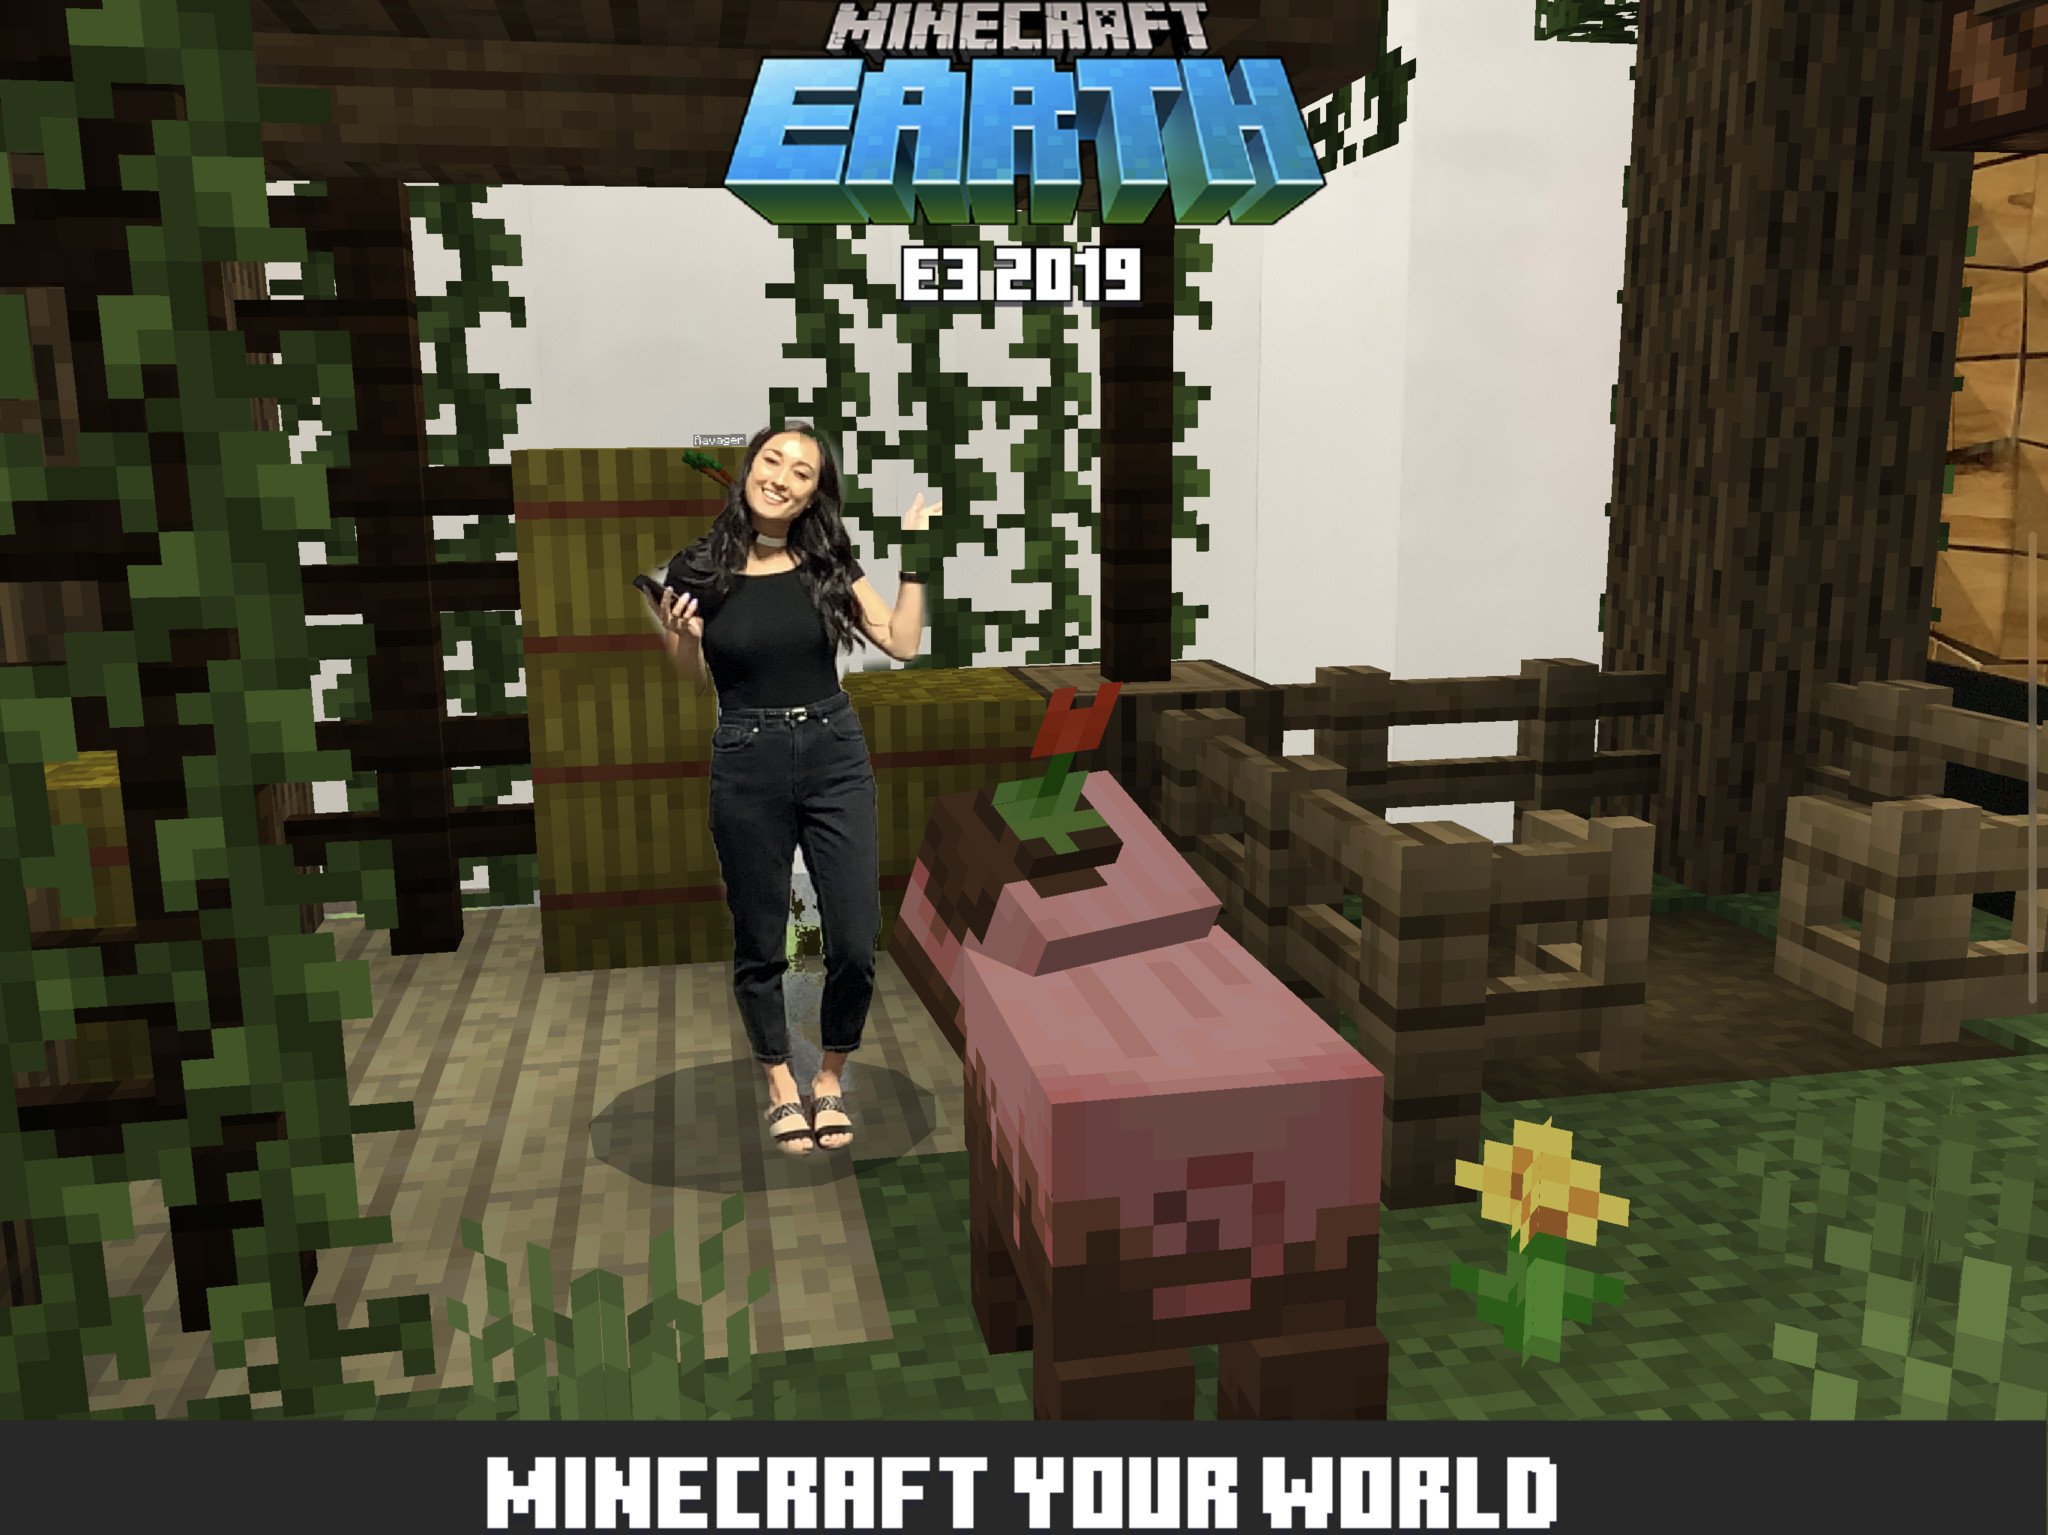 Minecraft Earth by Mojang